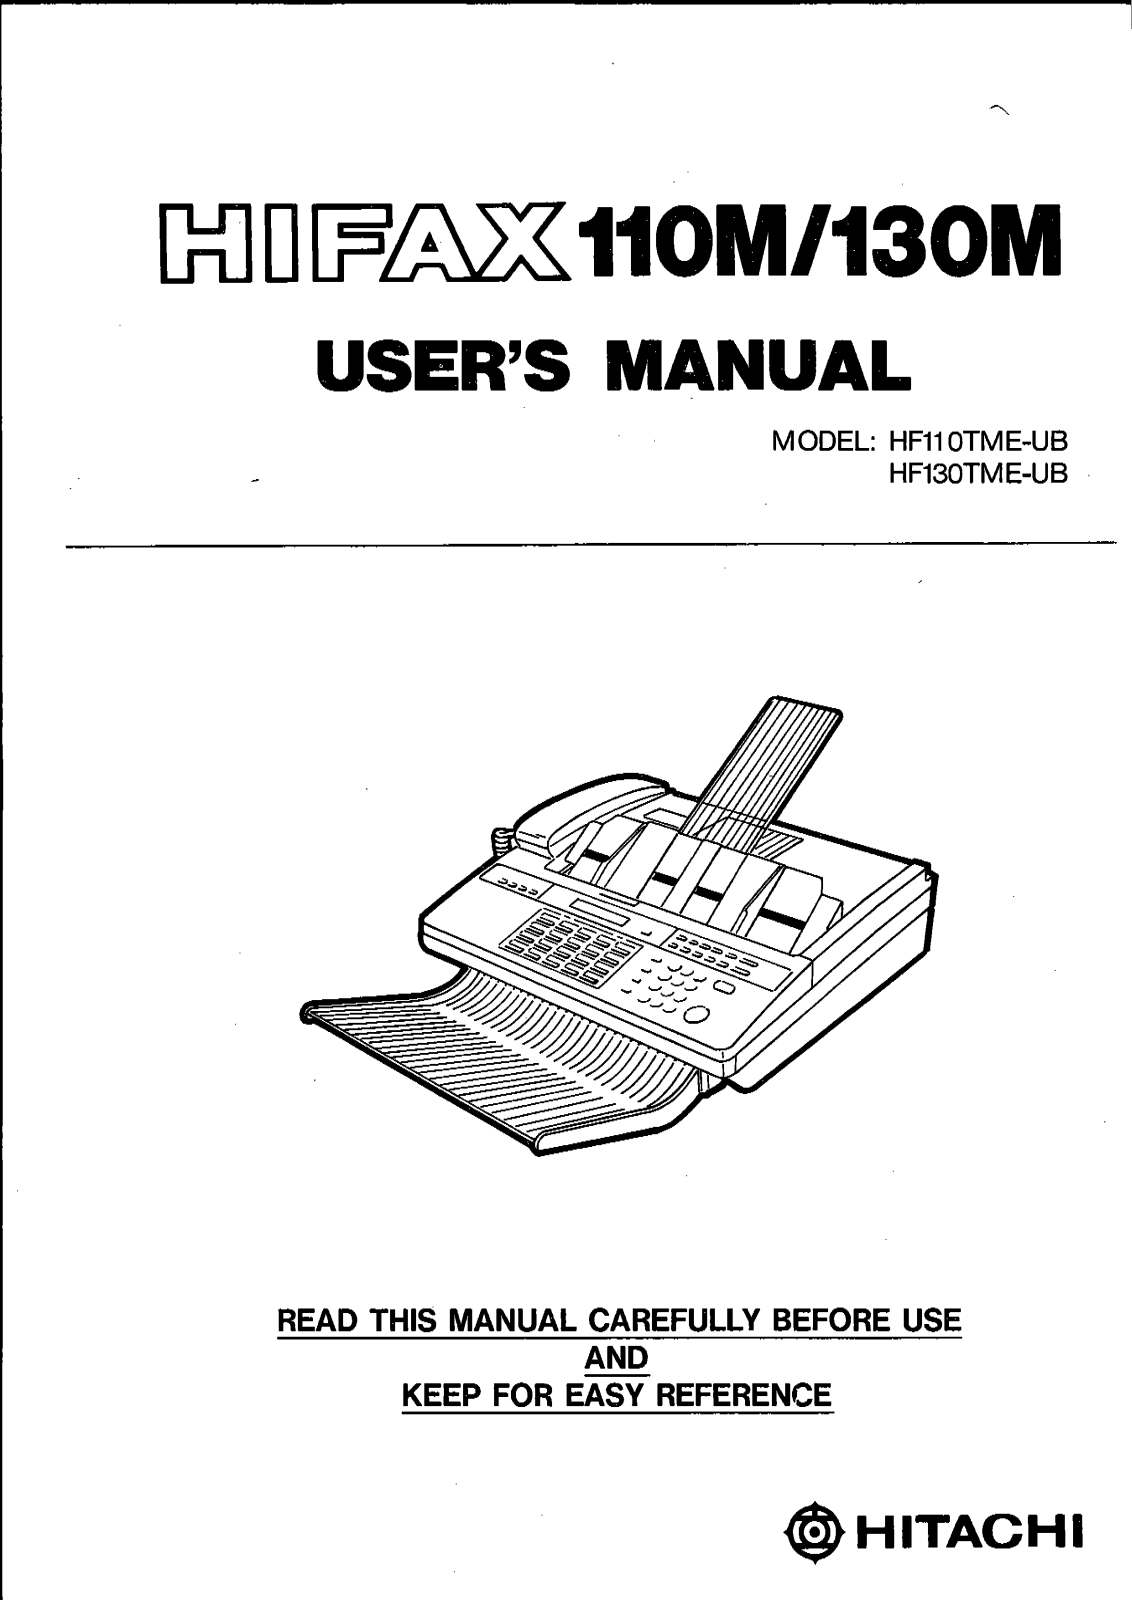 Hitachi HIFAX 110M, HIFAX 130M User Manual